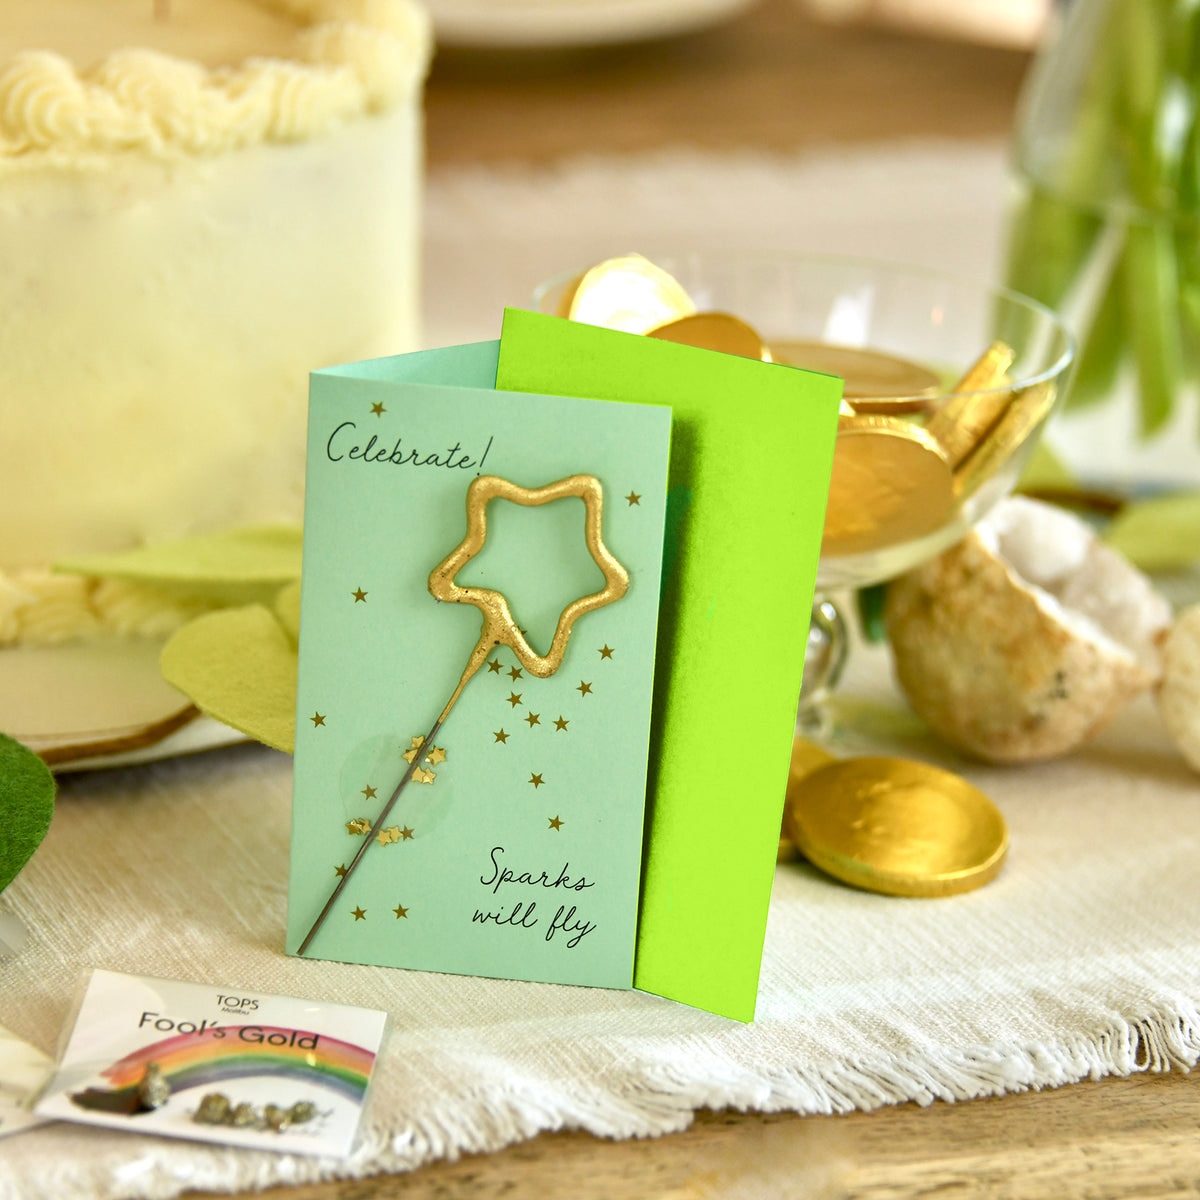 Confetti Sparkler Cards Celebrate!